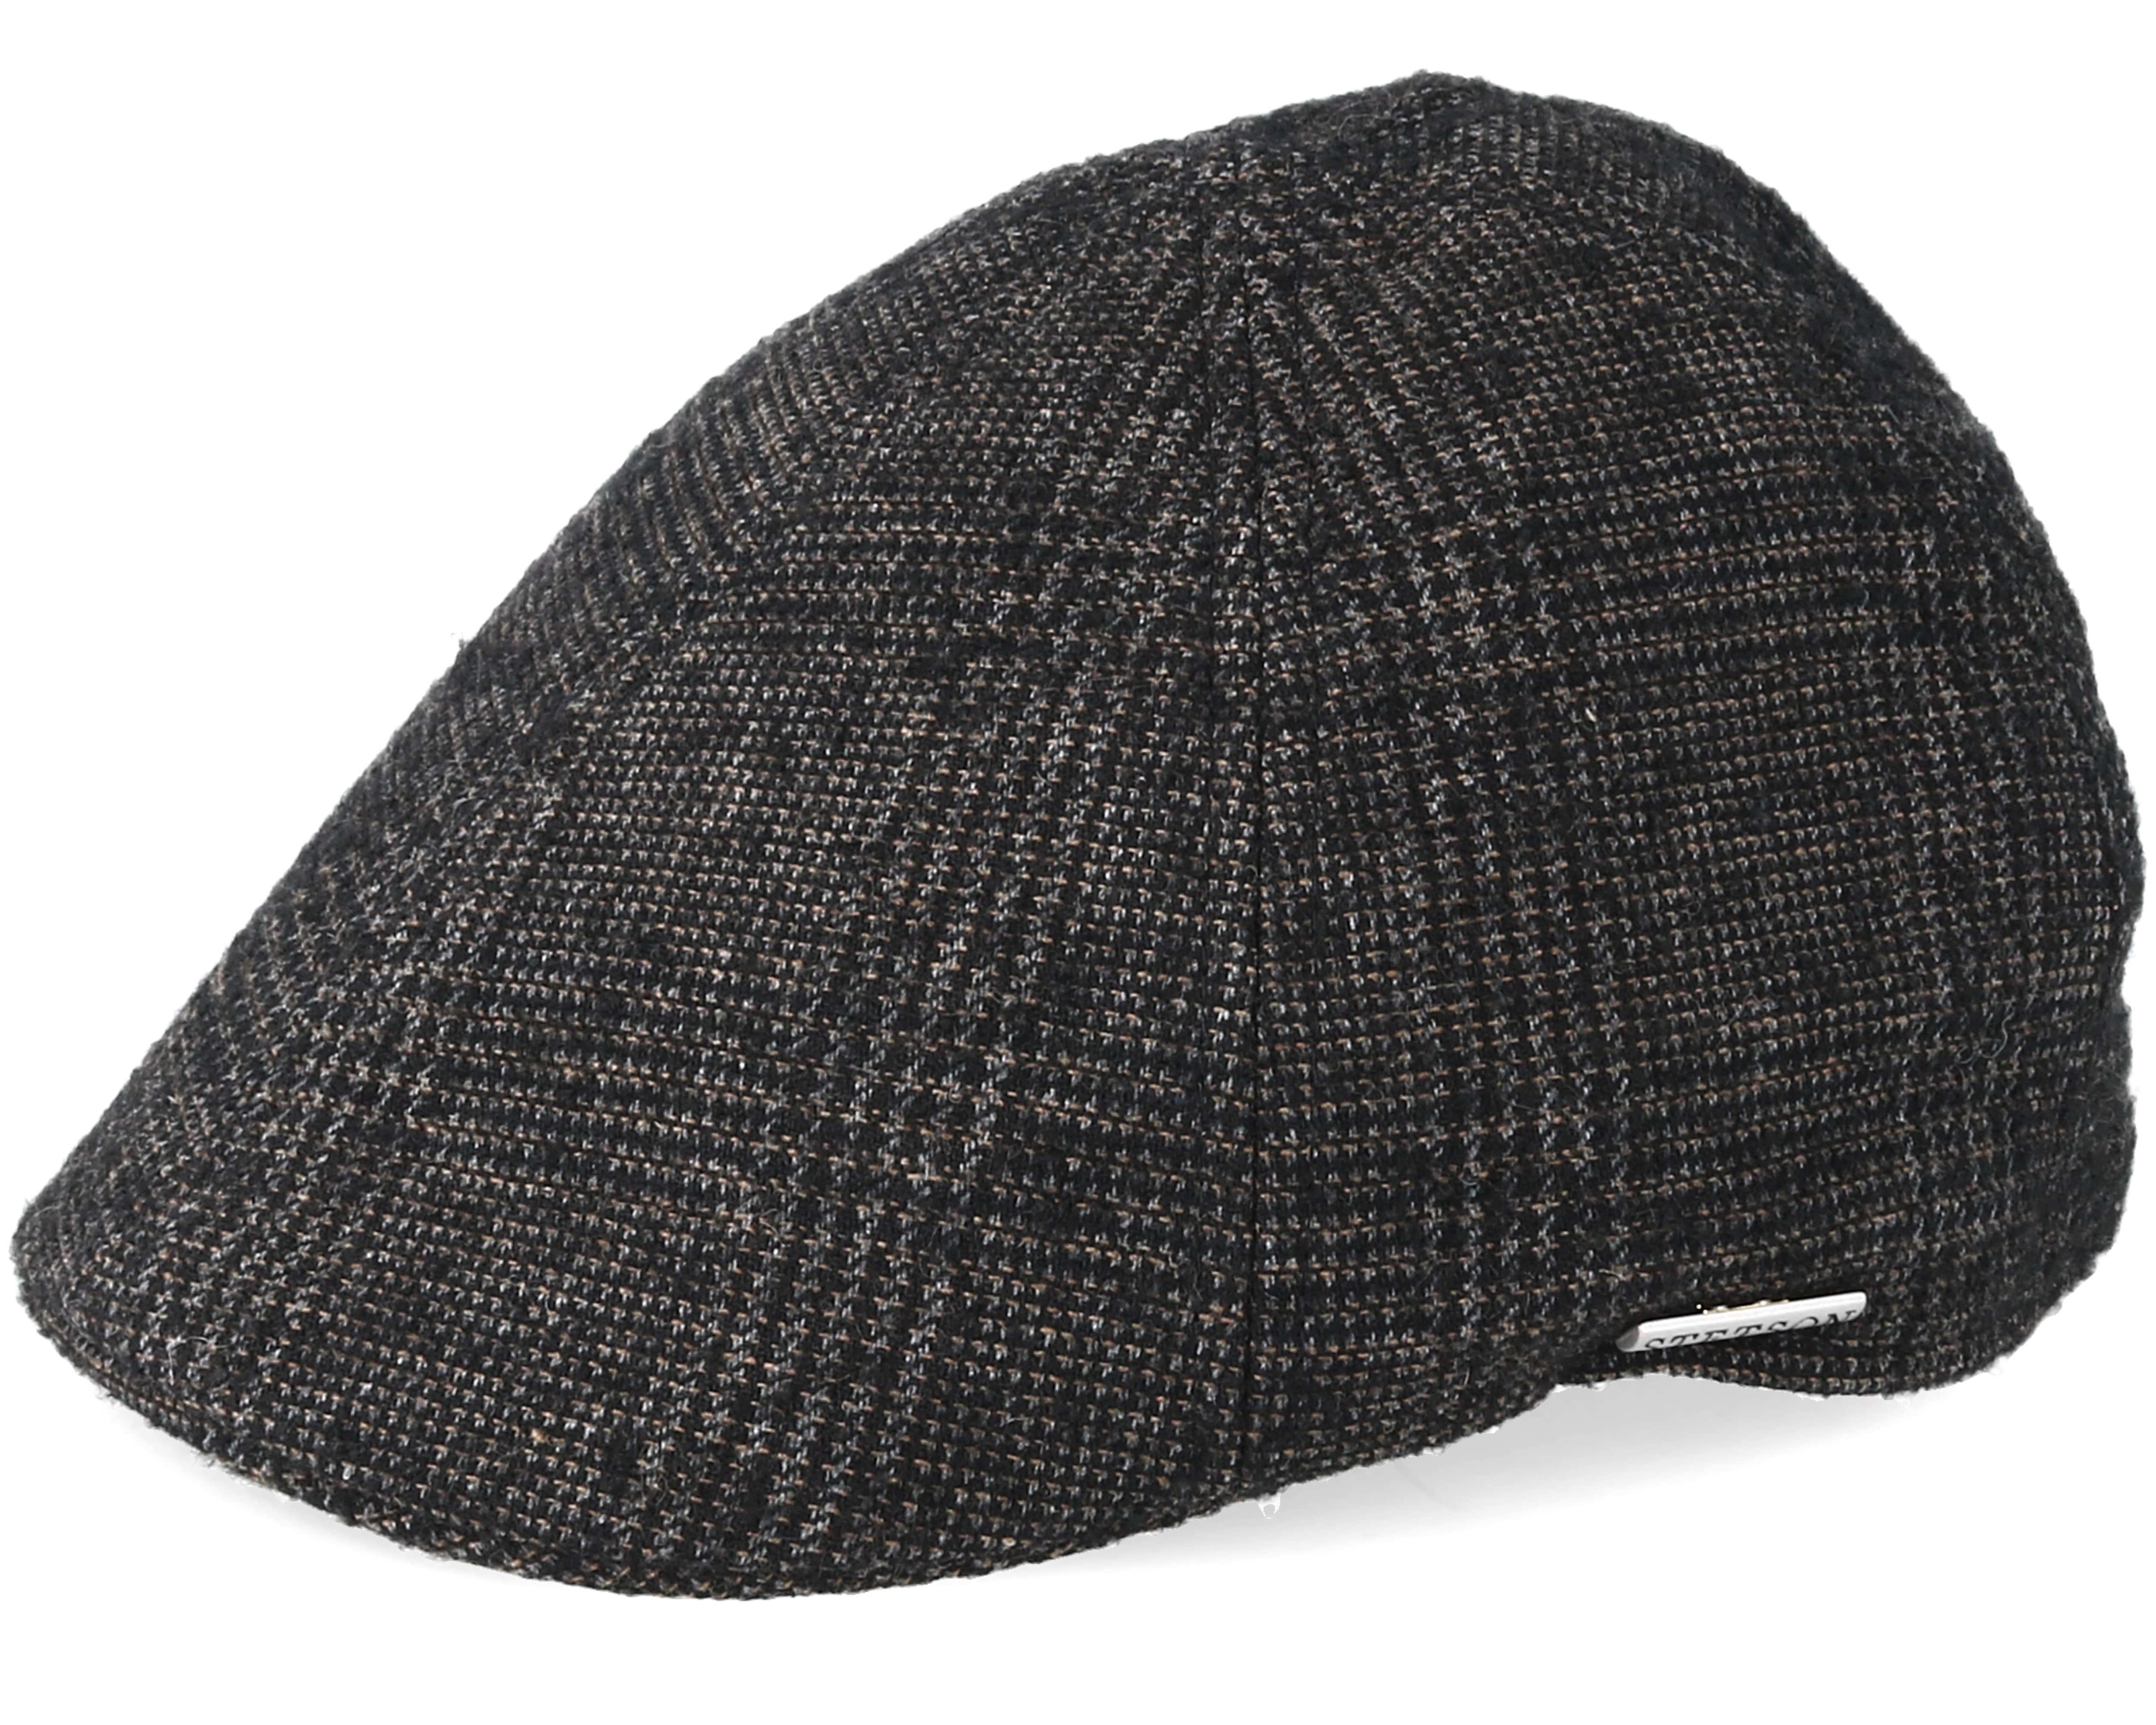 Texas Wool Brown/Black Flat Cap - Stetson caps | Hatstore.co.uk